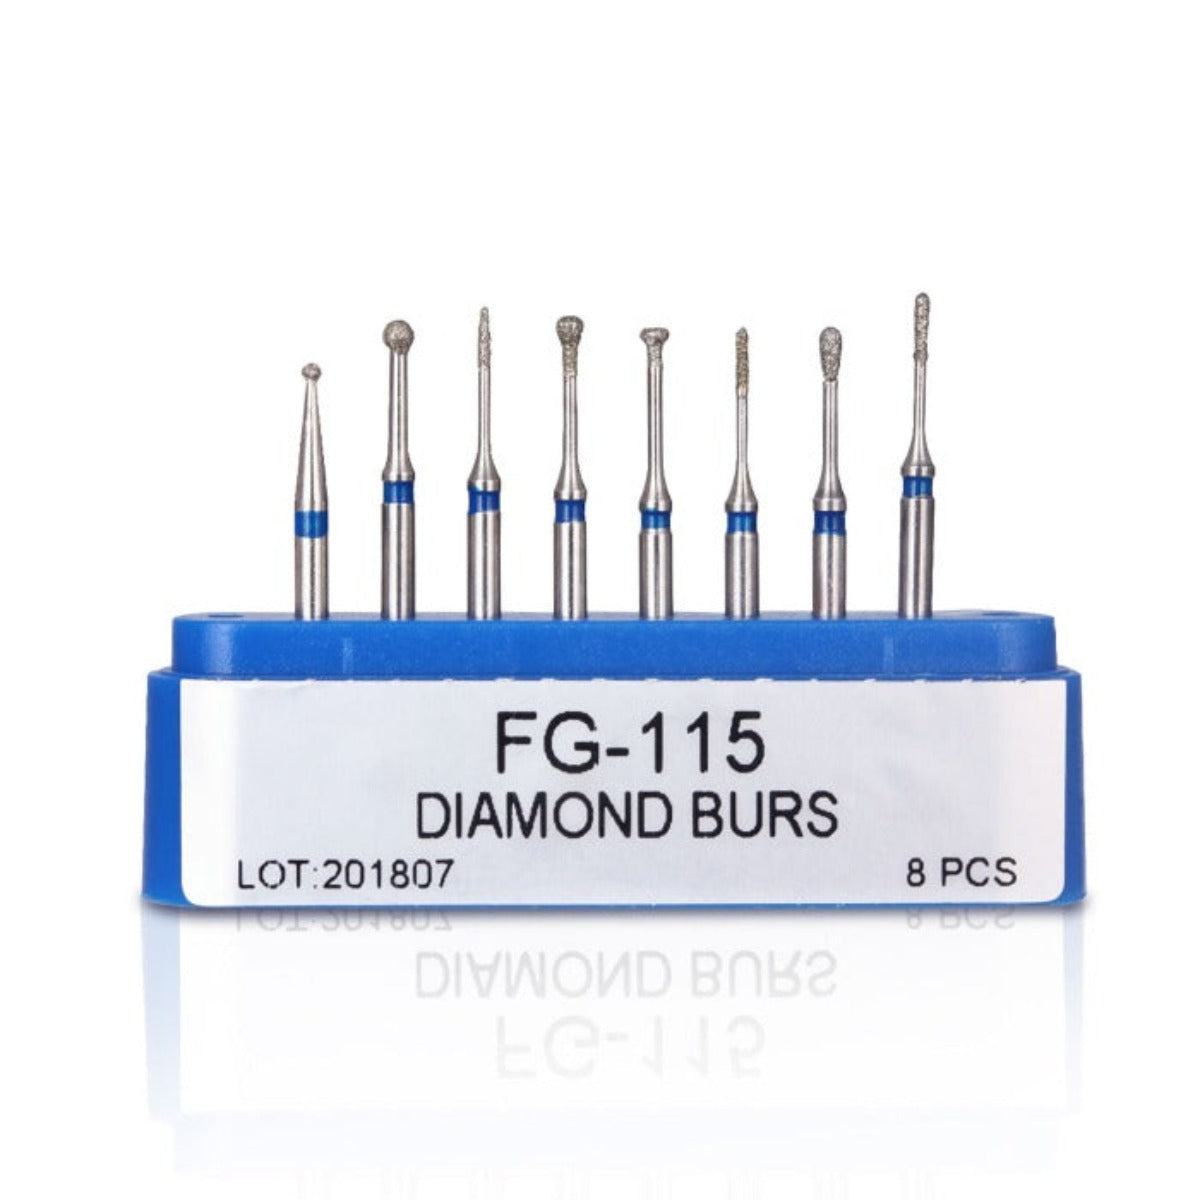 Dental Diamond Bur FG-115 Minimally Invasive Cavity Preparation Coarse Kit 8pcs/Kit - pairaydental.com